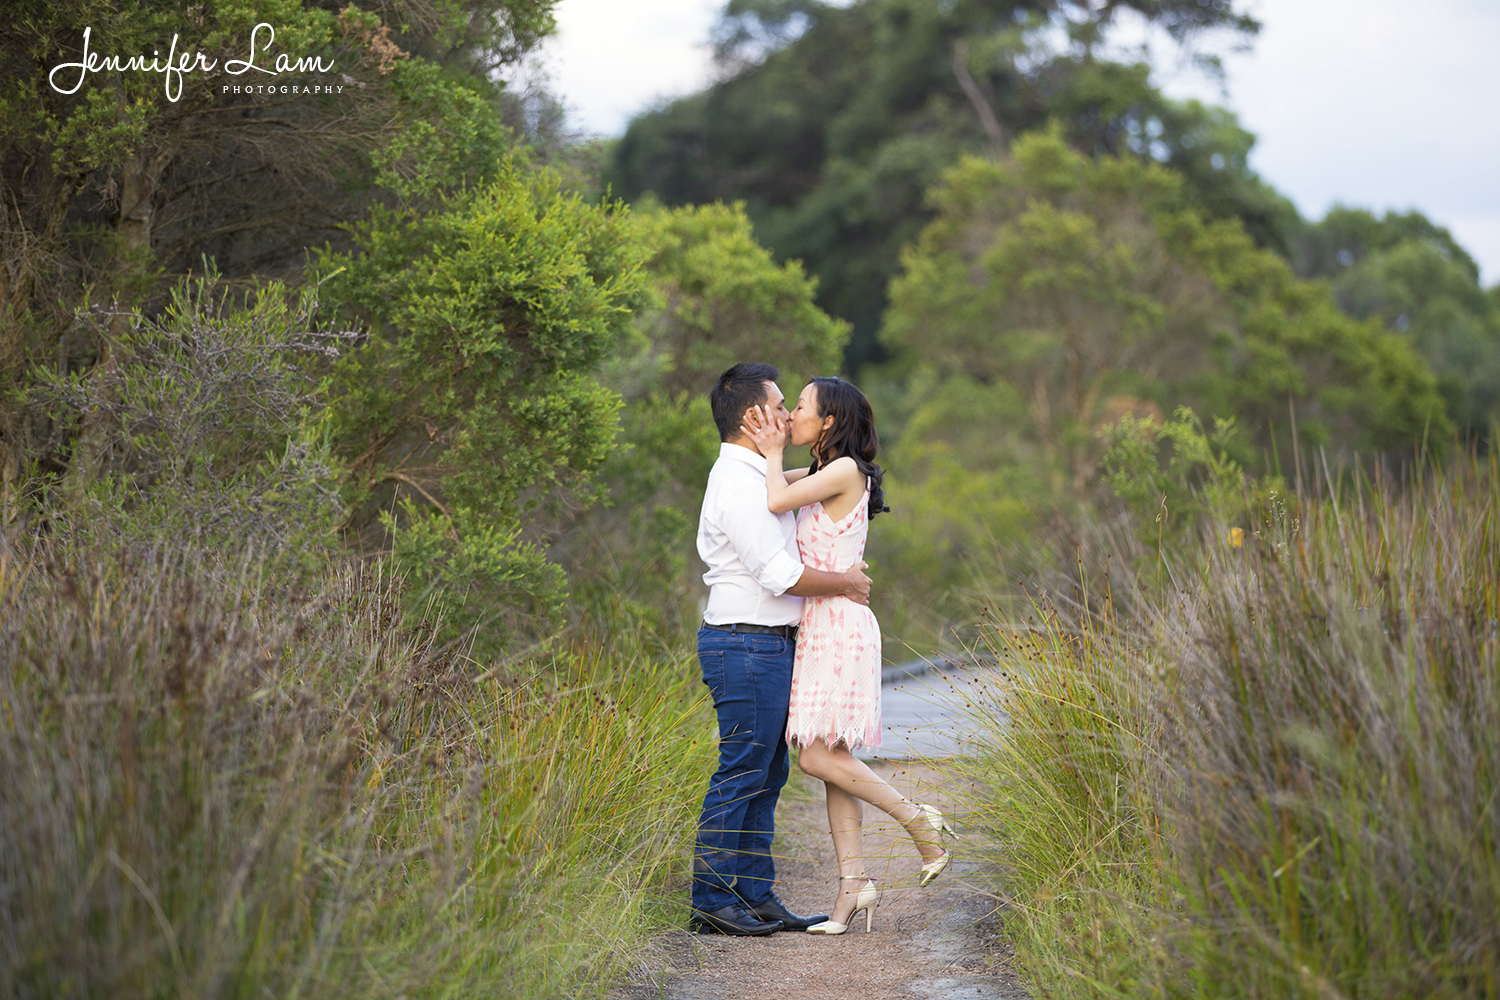 Sydney Wedding Photographer - Jennifer Lam Photography (17).jpg